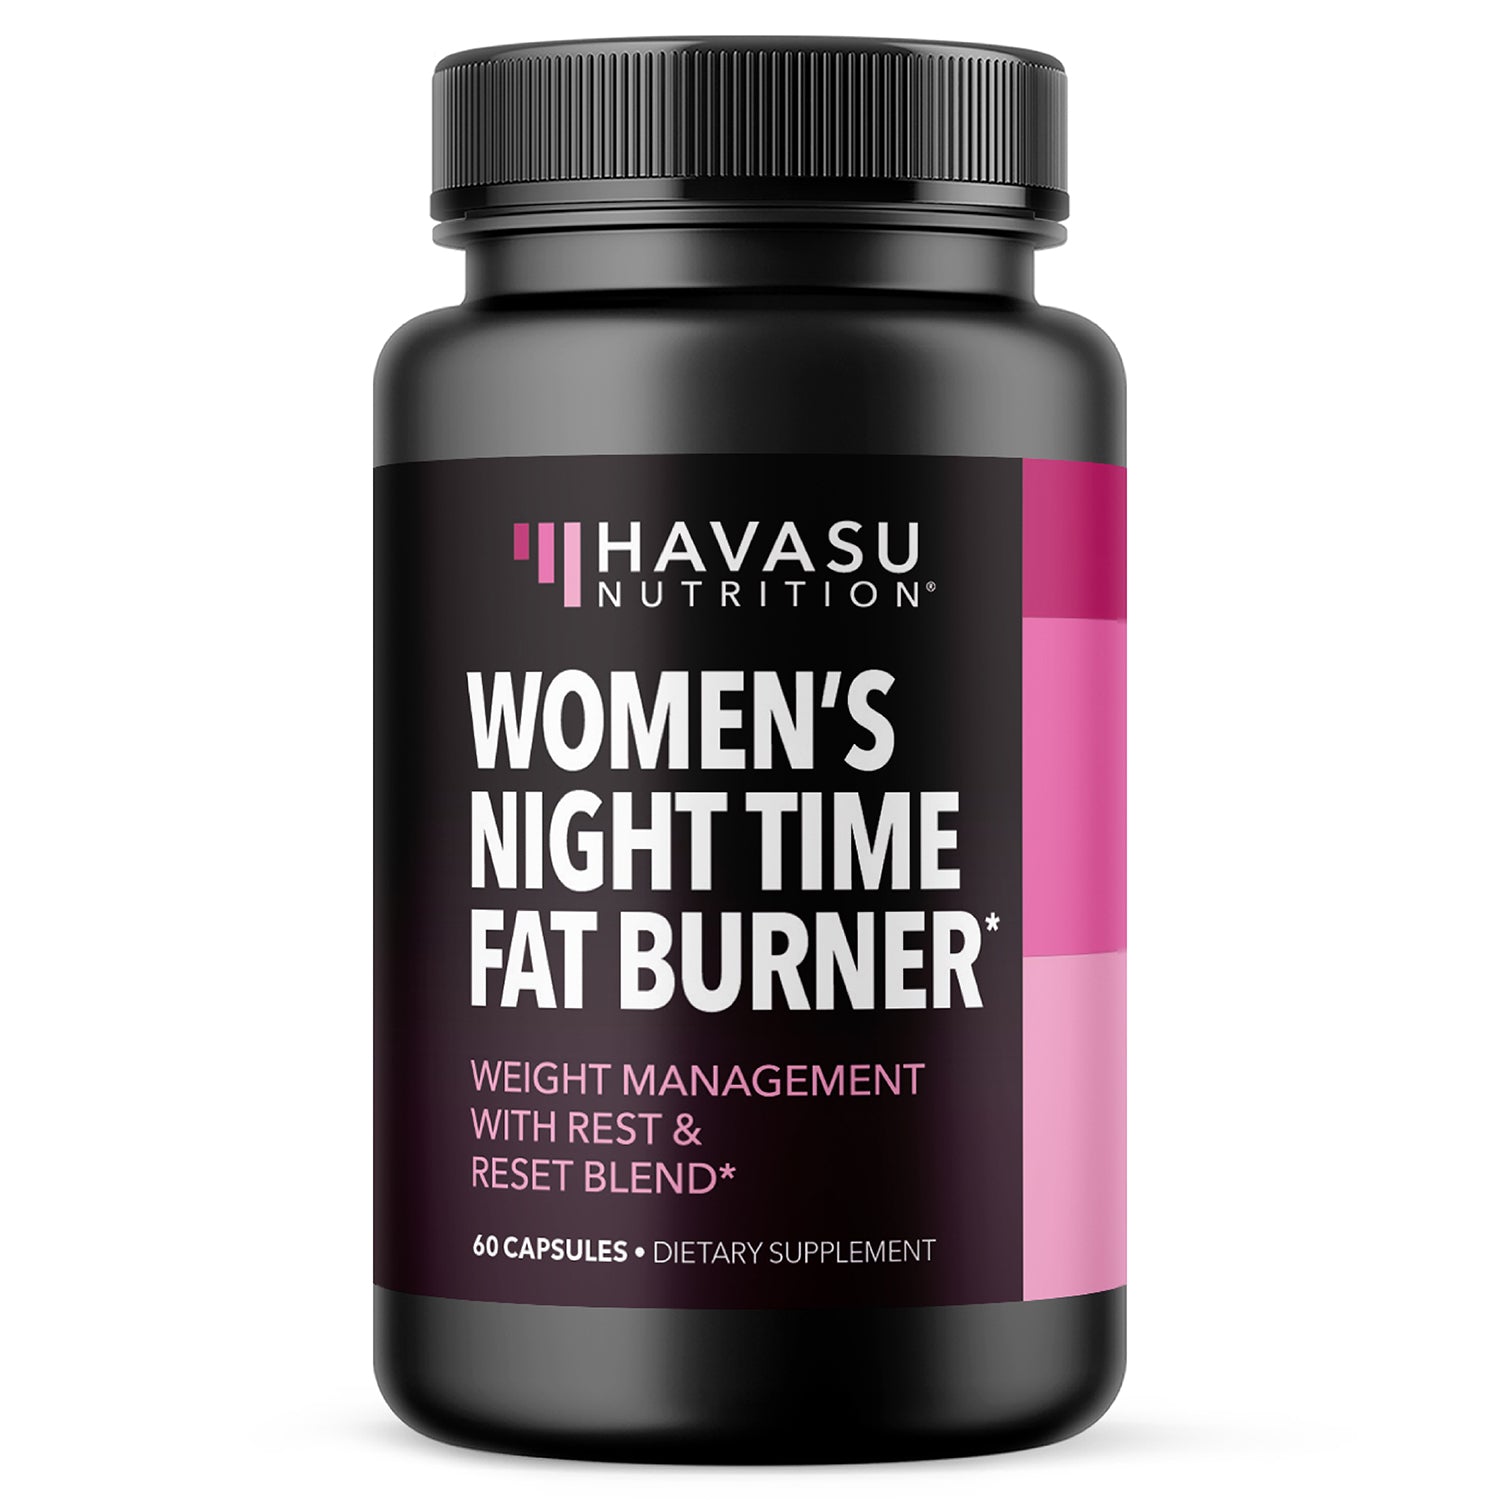 Night Time Fat Burner for Women - Havasu Nutrition